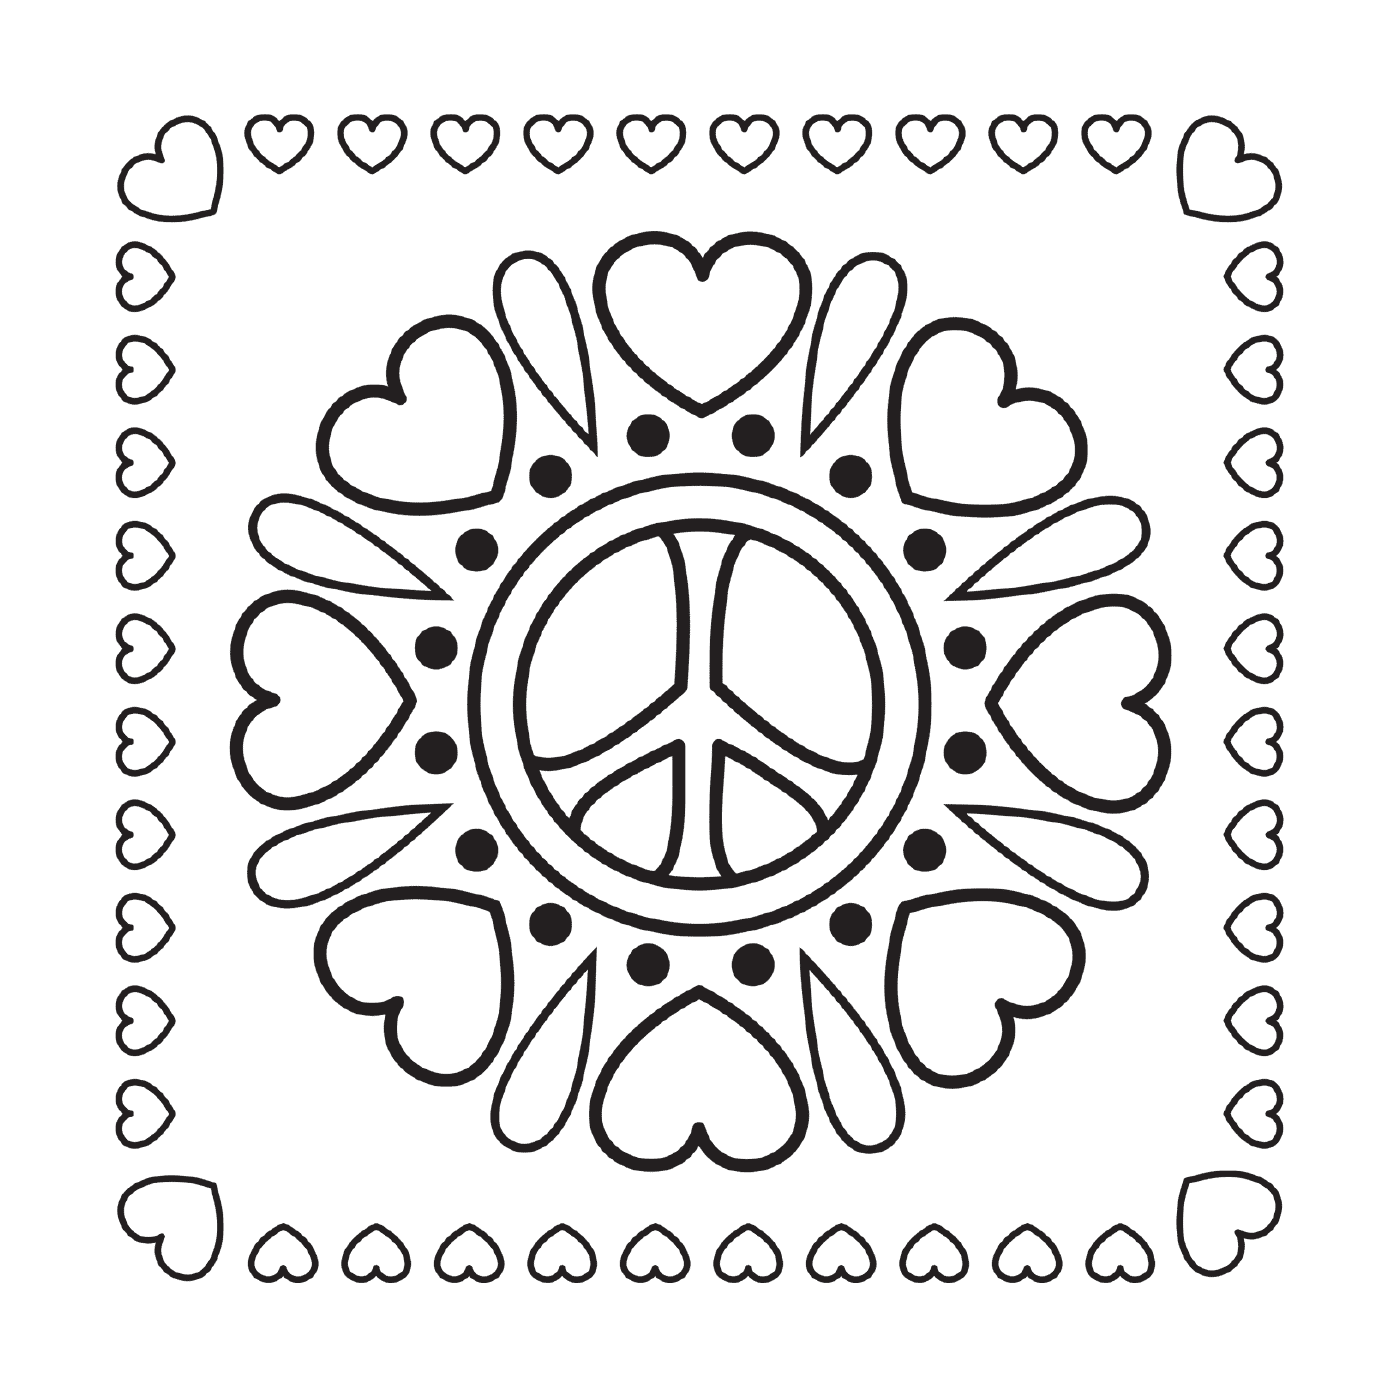  Mandala of peace with hearts 